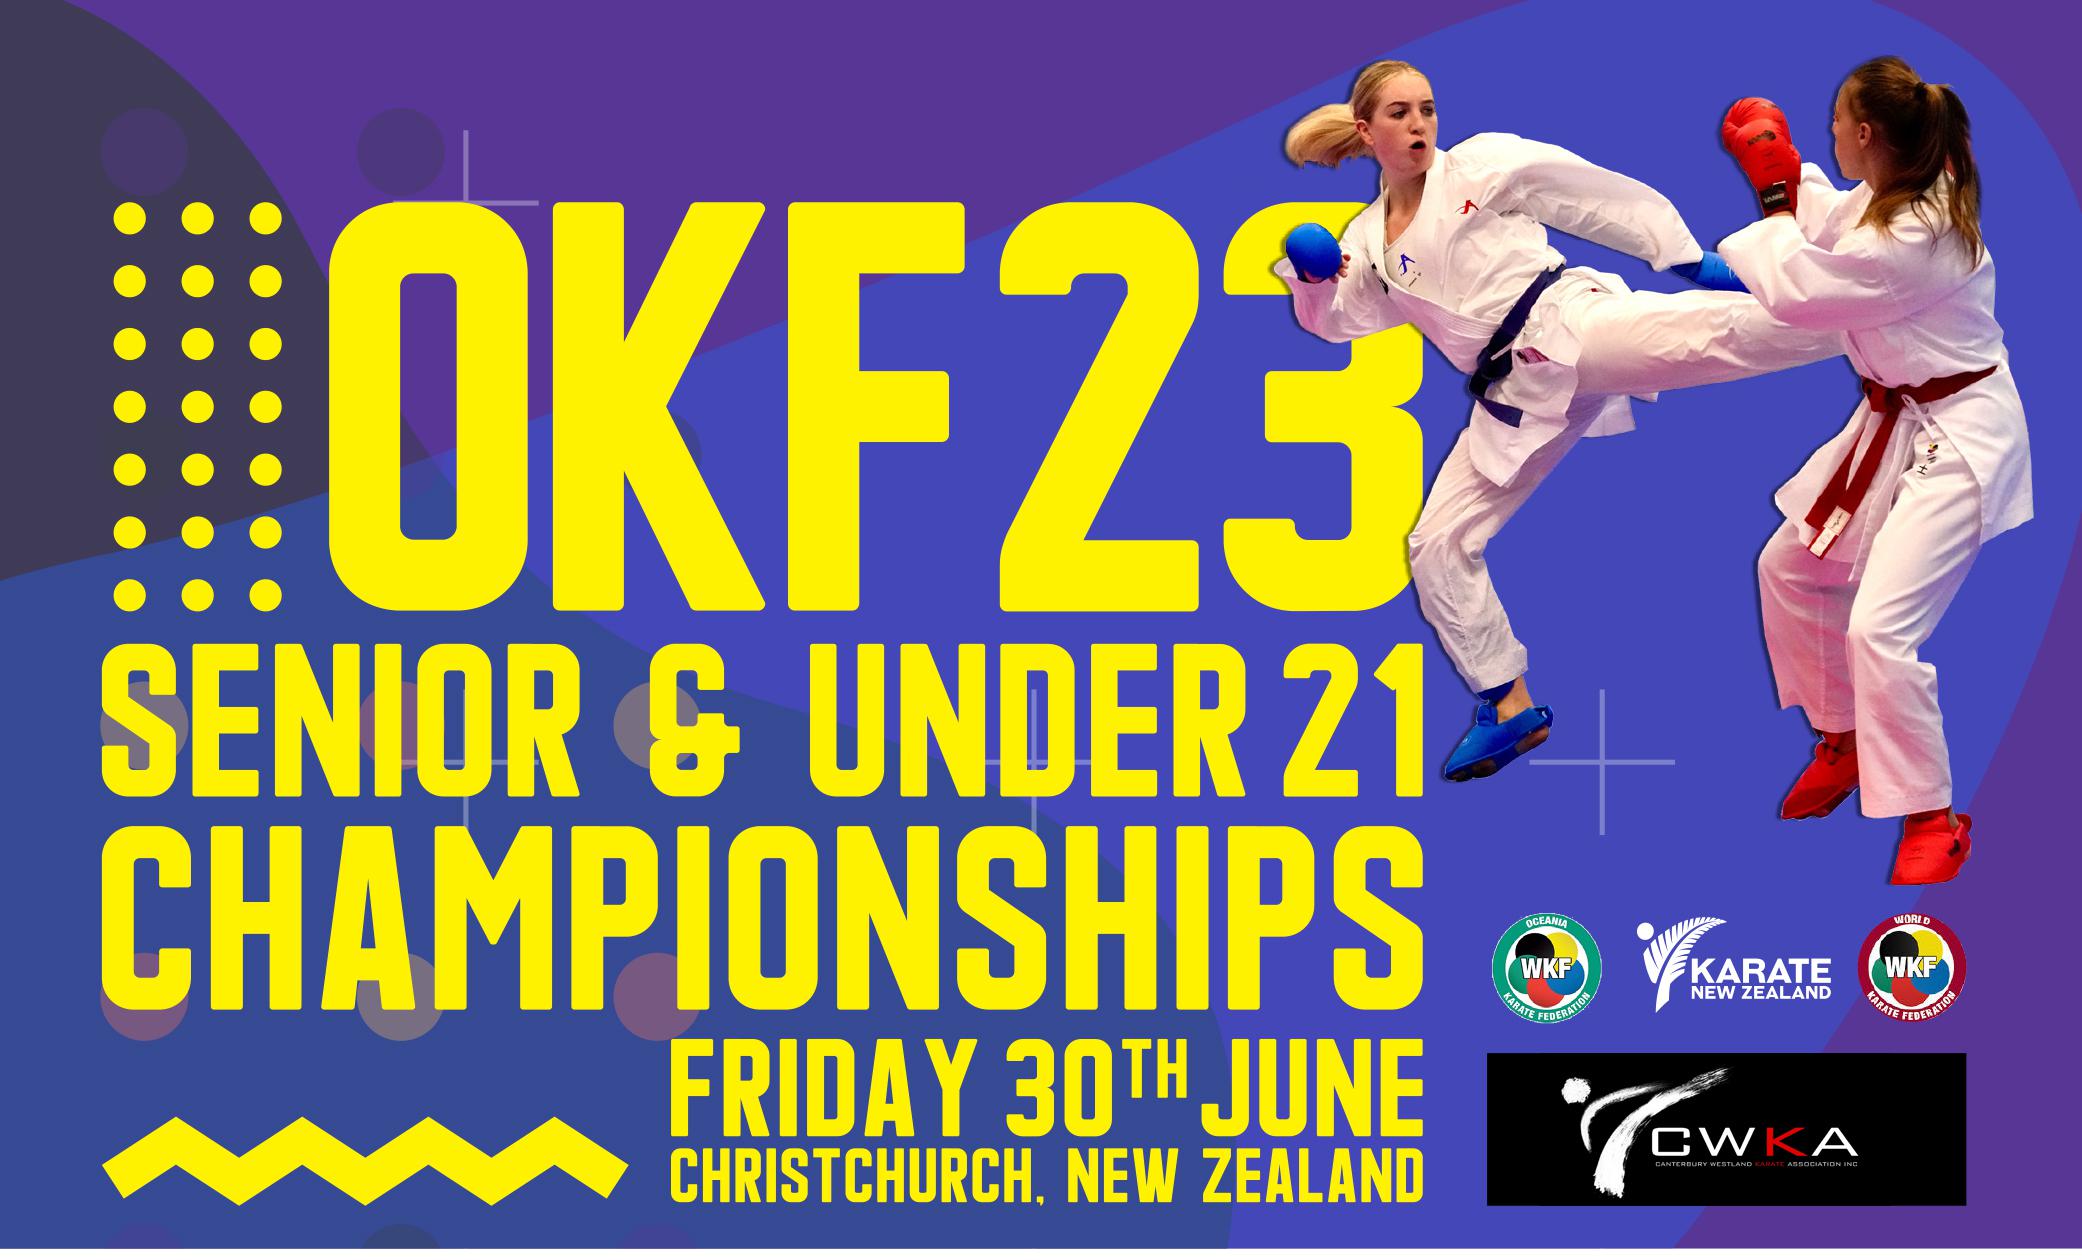 2022 WKF U21, Junior & Cadet World Championships